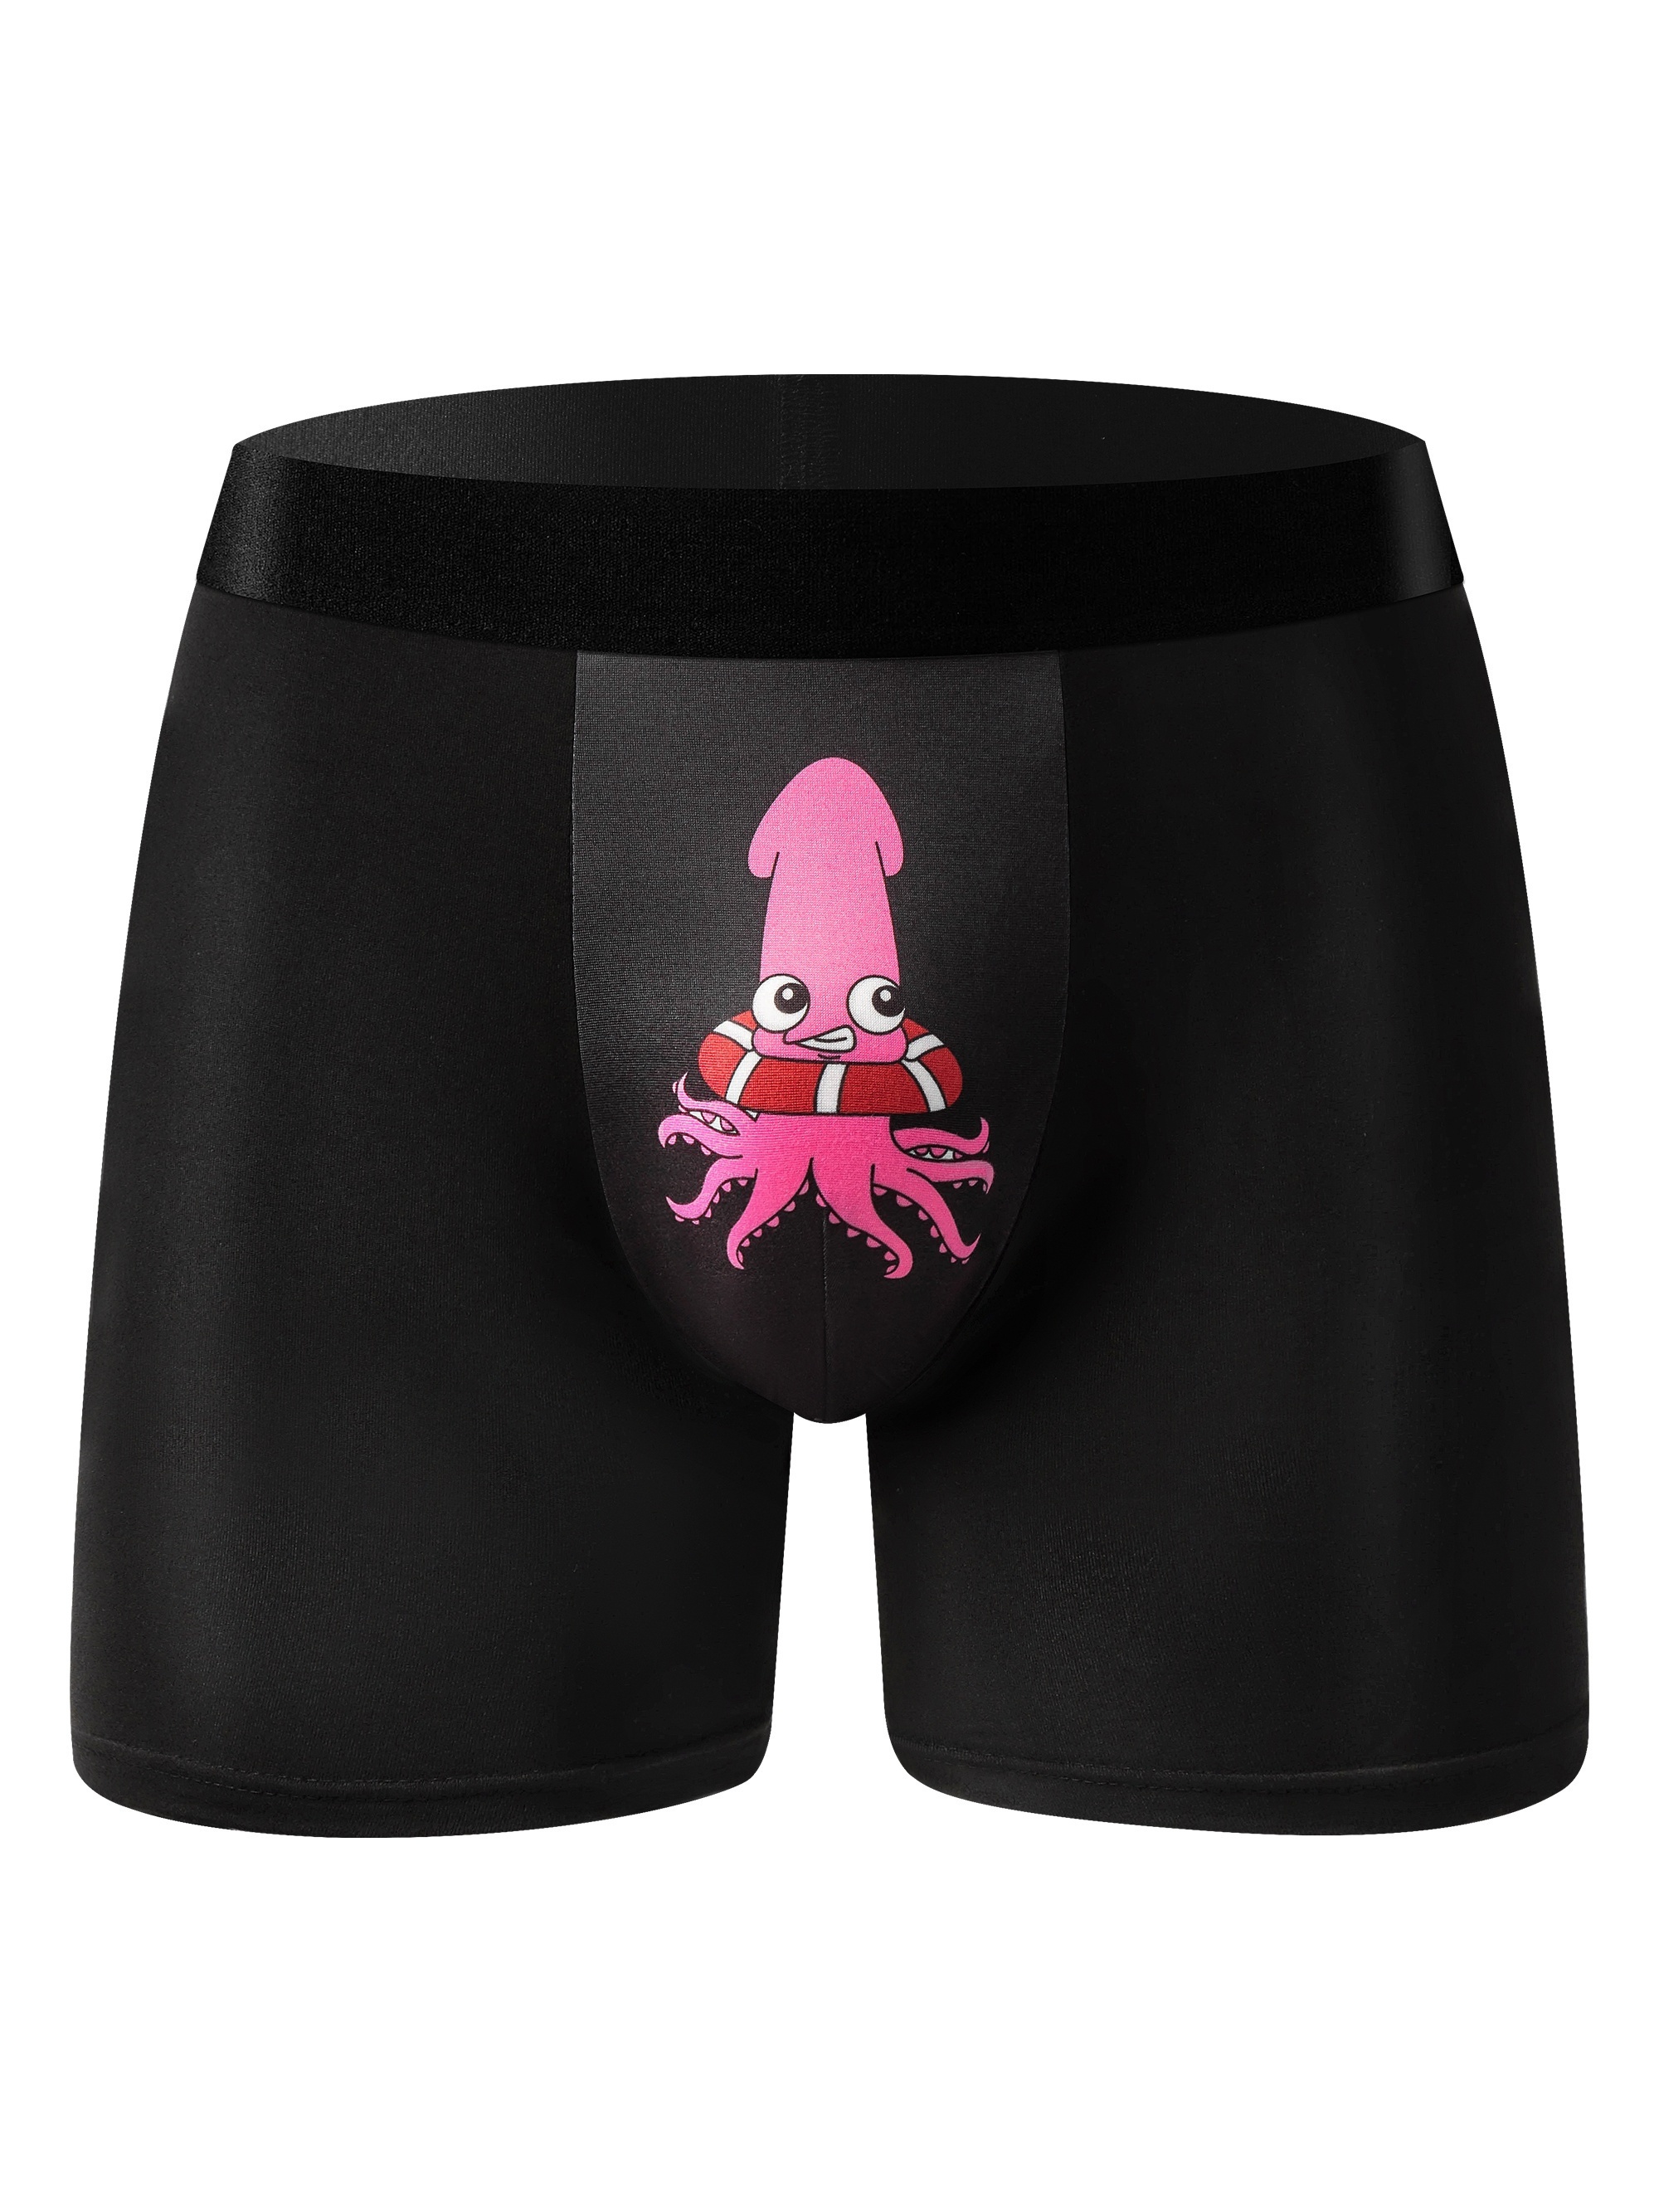 Men Elephant Boxer Shorts Fun Novelty Humorous Shorts Underwear